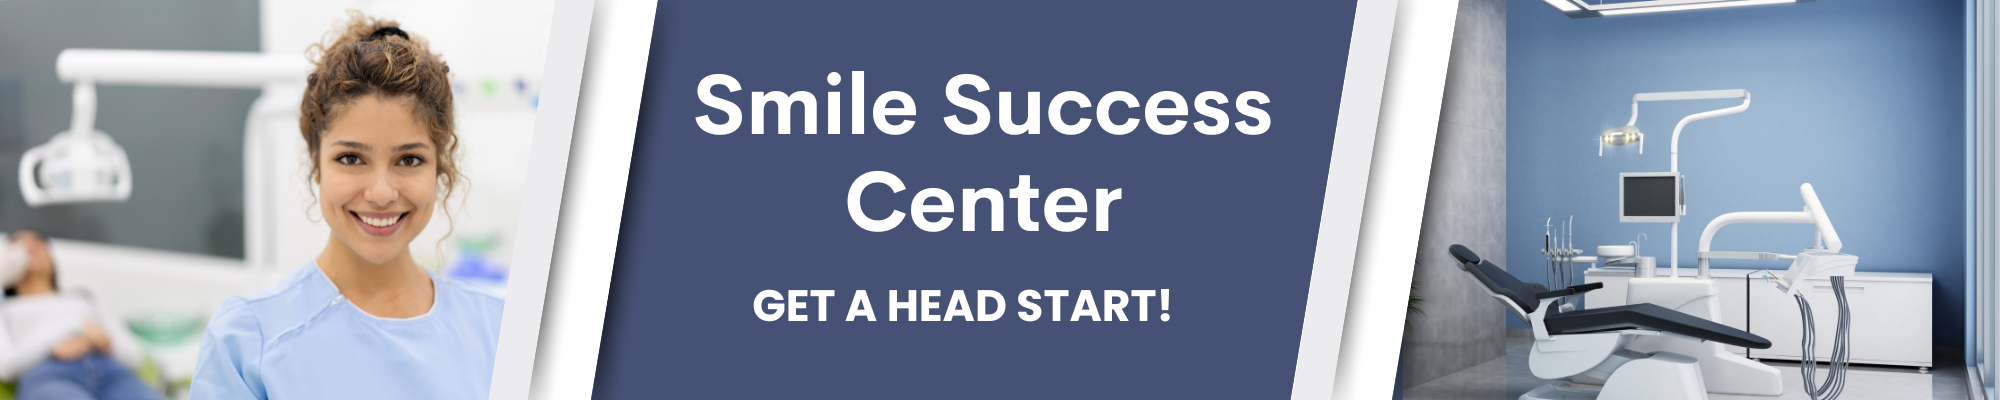 Smile Success Center